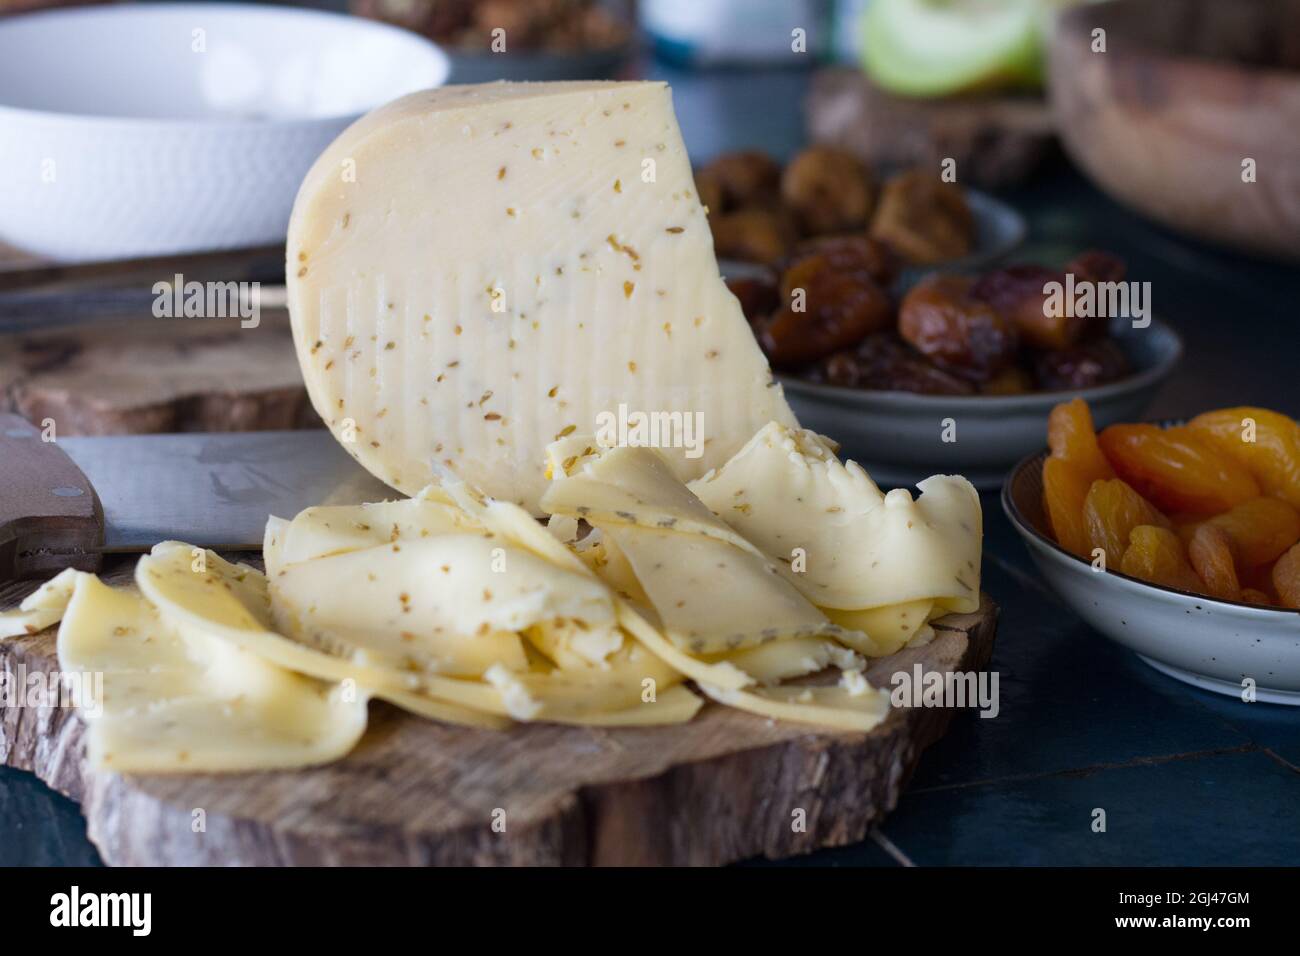 Frühstücksbuffet mit Käse, Wurst, Obst und Omelettes Stockfoto